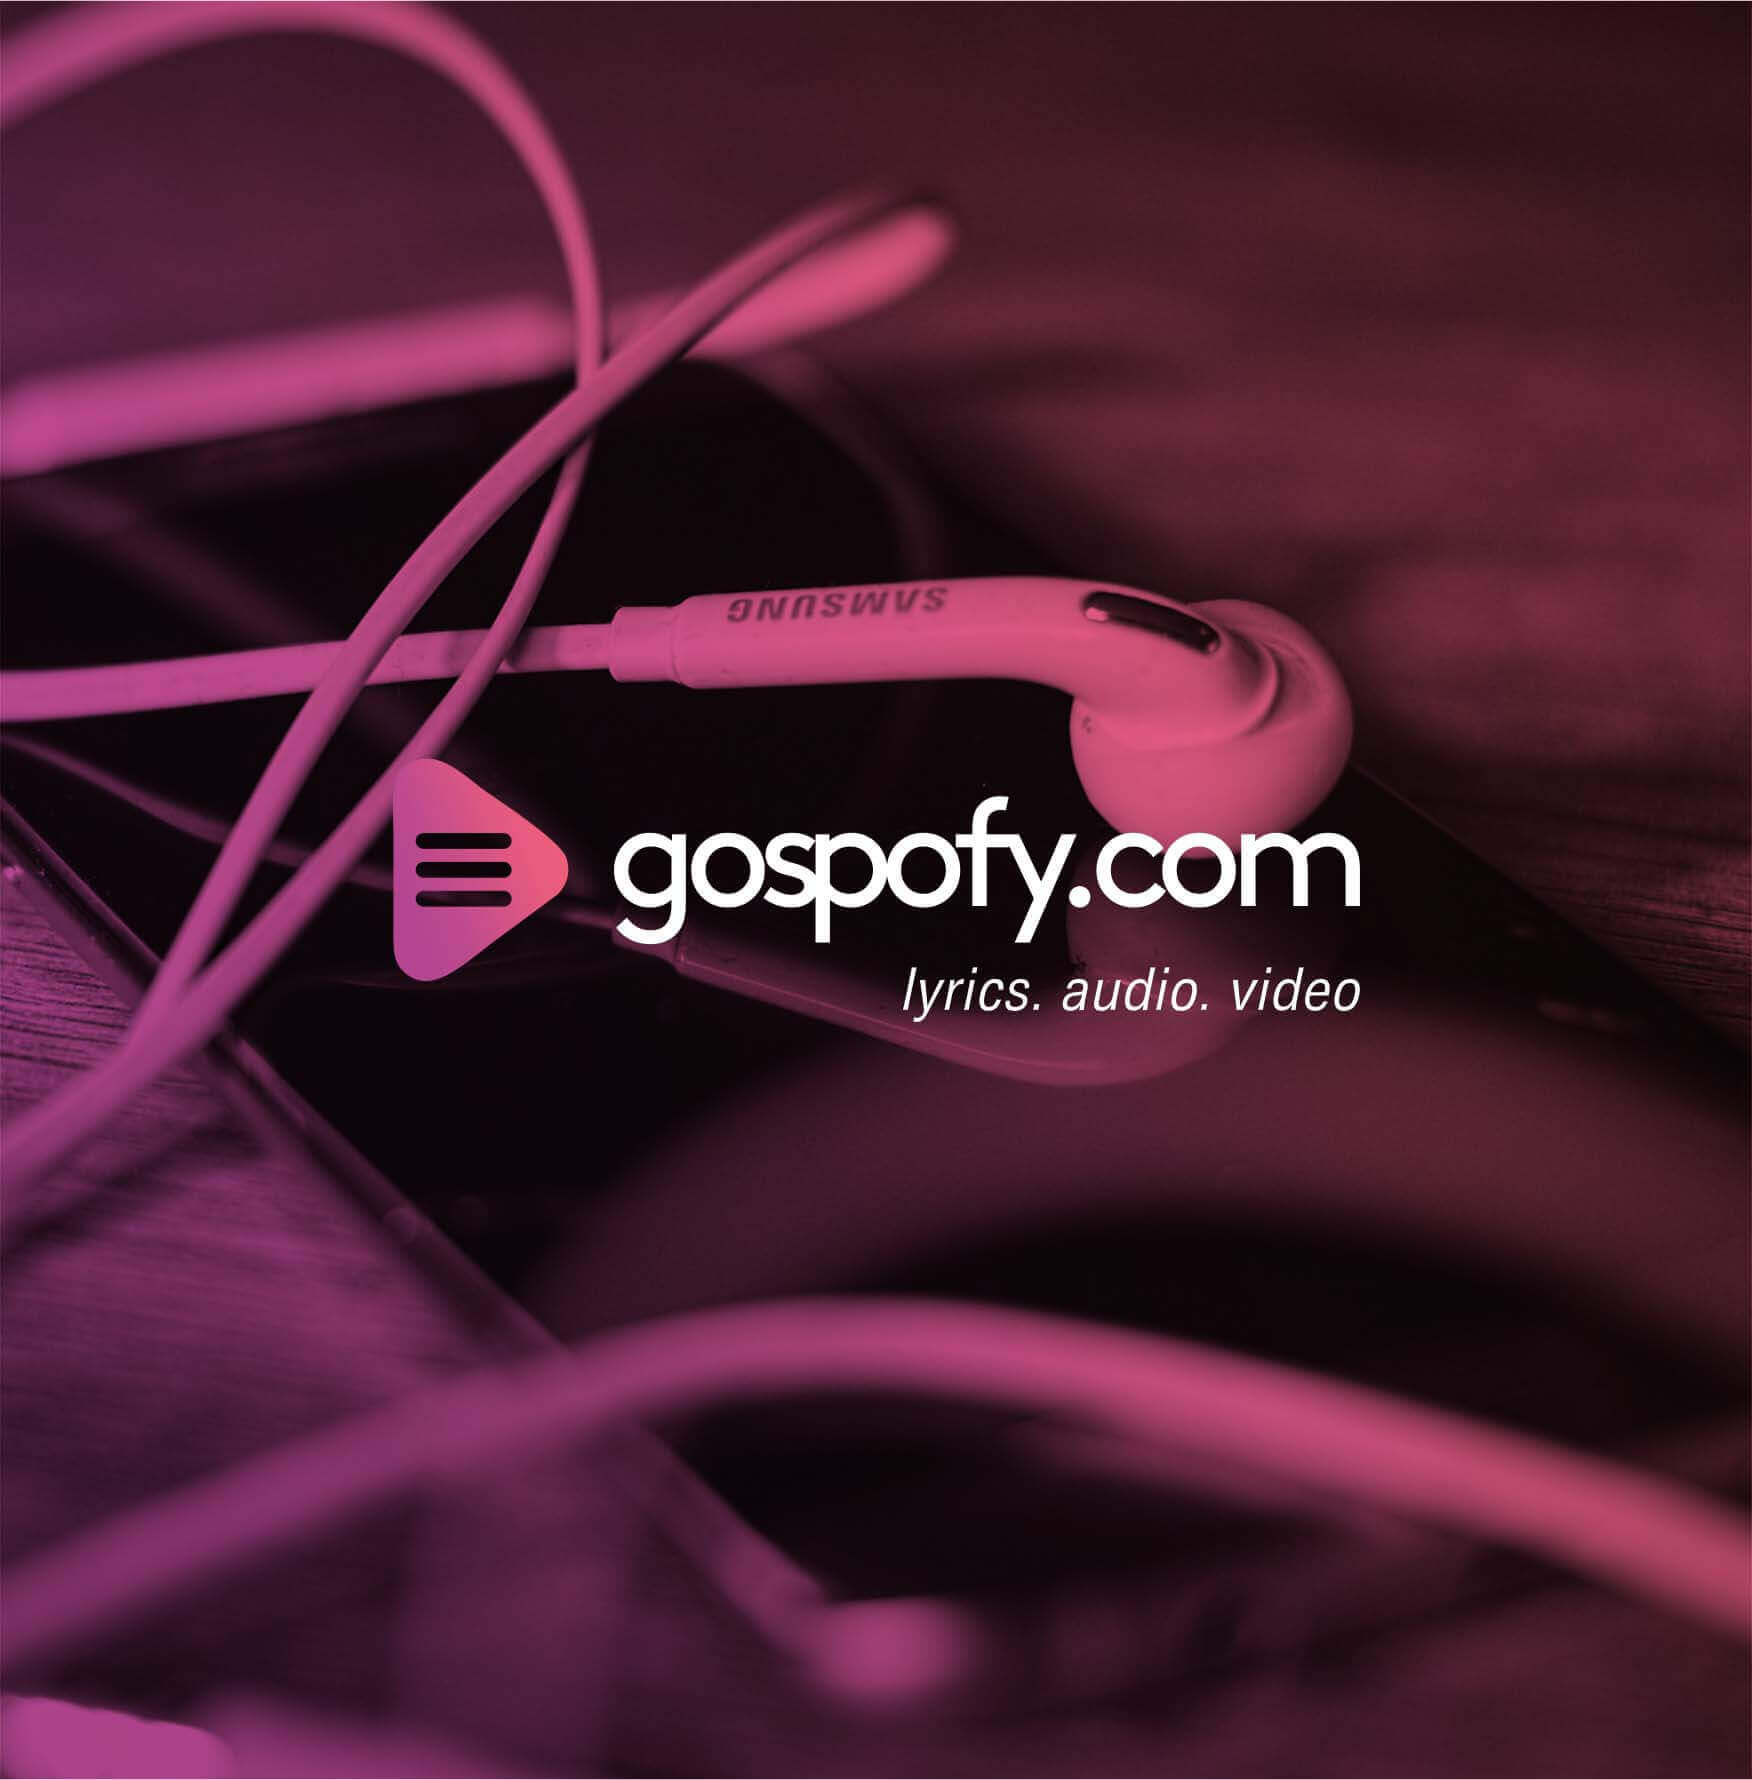 Gospofy Logo Design - Website Exclusive To Gospel Music